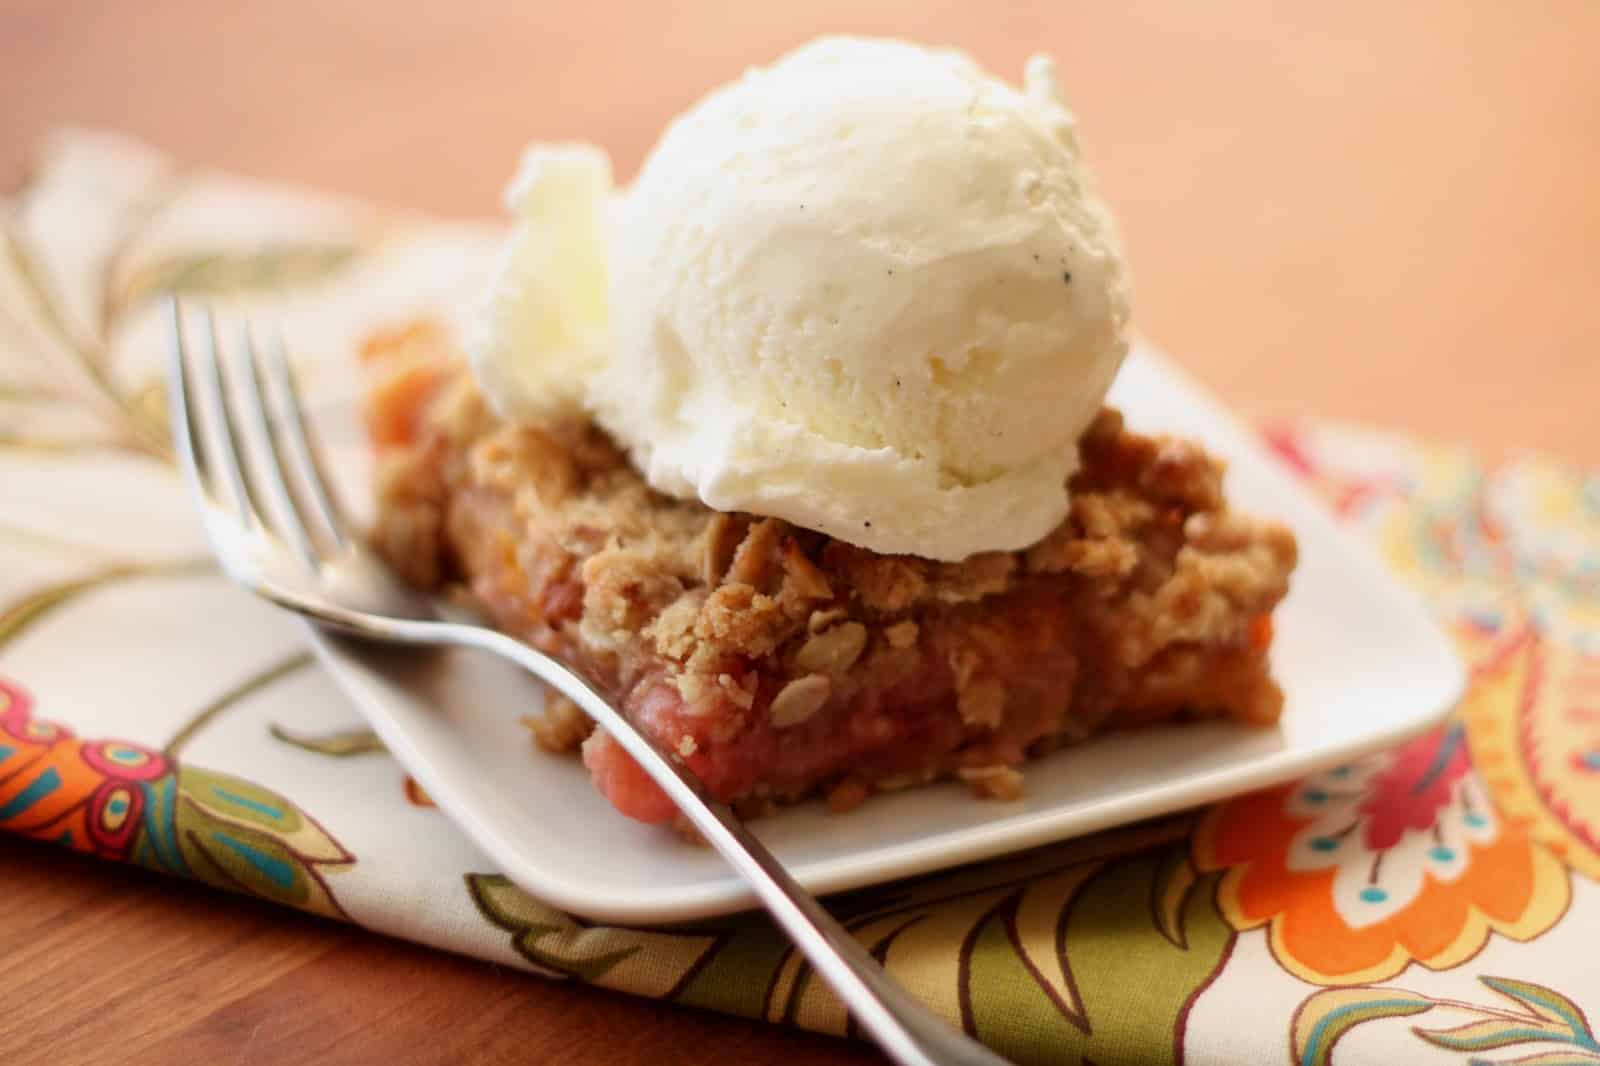 https://barefeetinthekitchen.com/wp-content/uploads/2013/06/simple-vanilla-bean-ice-cream-with-apricot-rhubarb-crunch-5-1.jpg